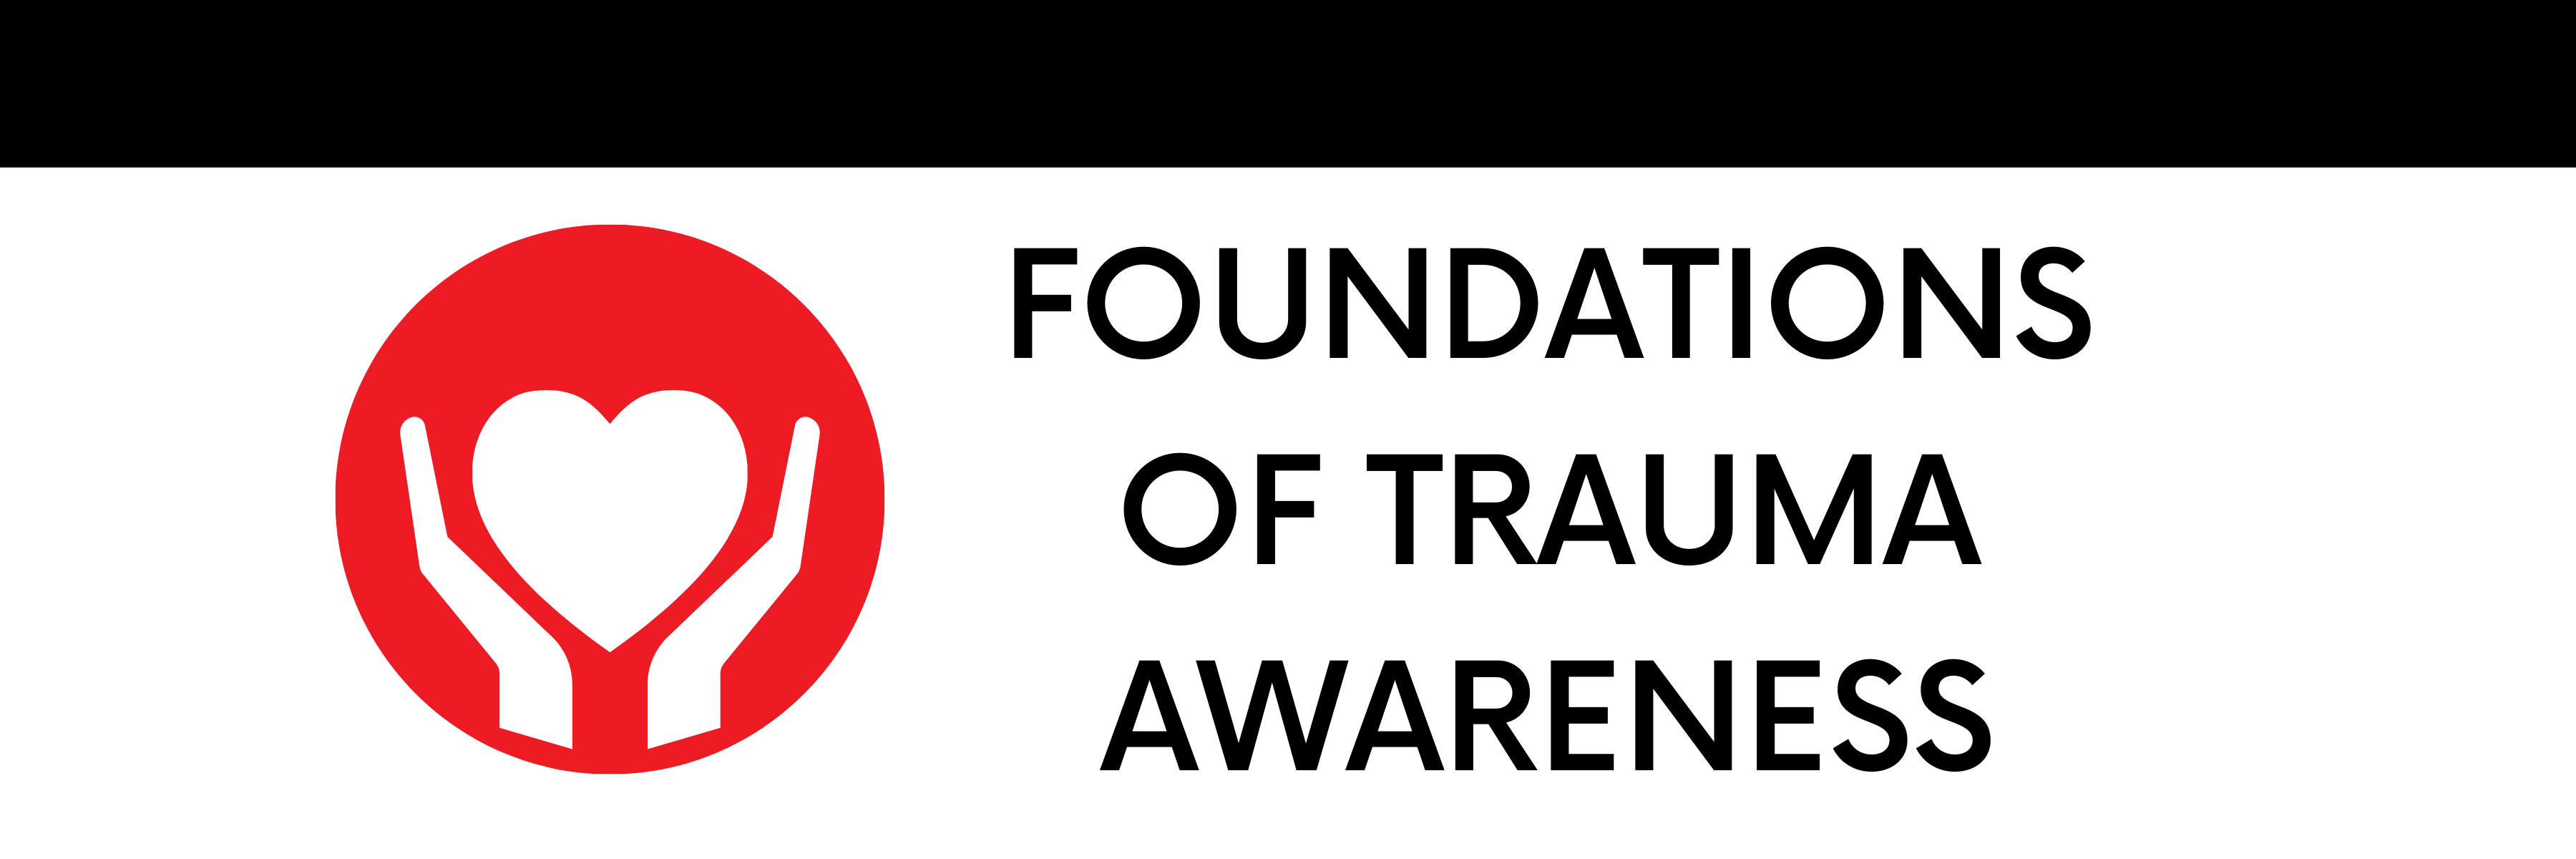 Foundations of Trauma Awareness header image